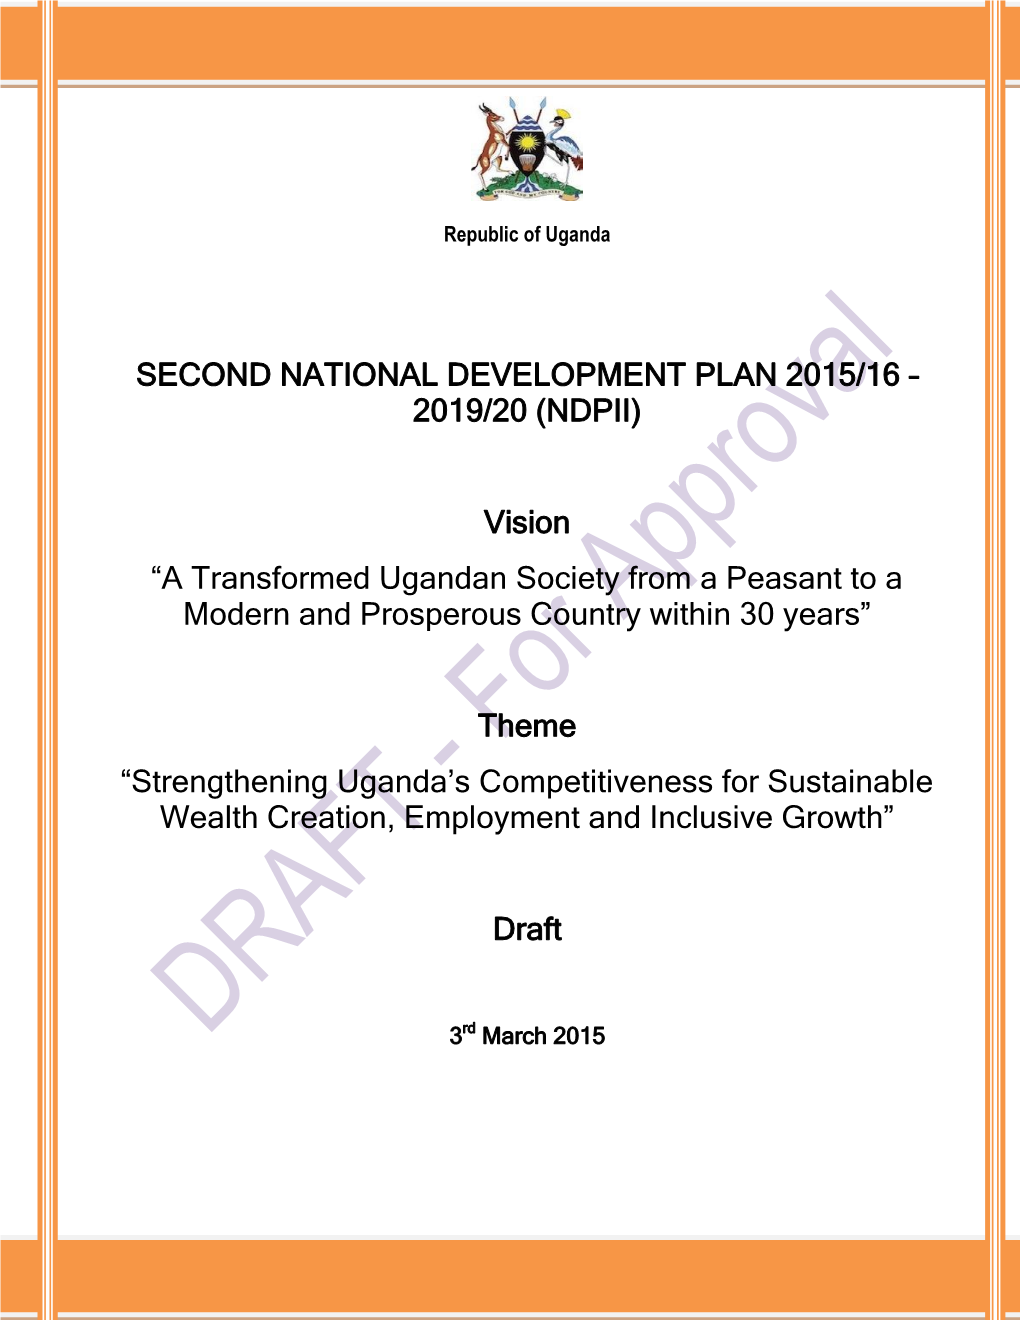 Second National Development Plan 2015 16 to 2019 20 (NDPII)